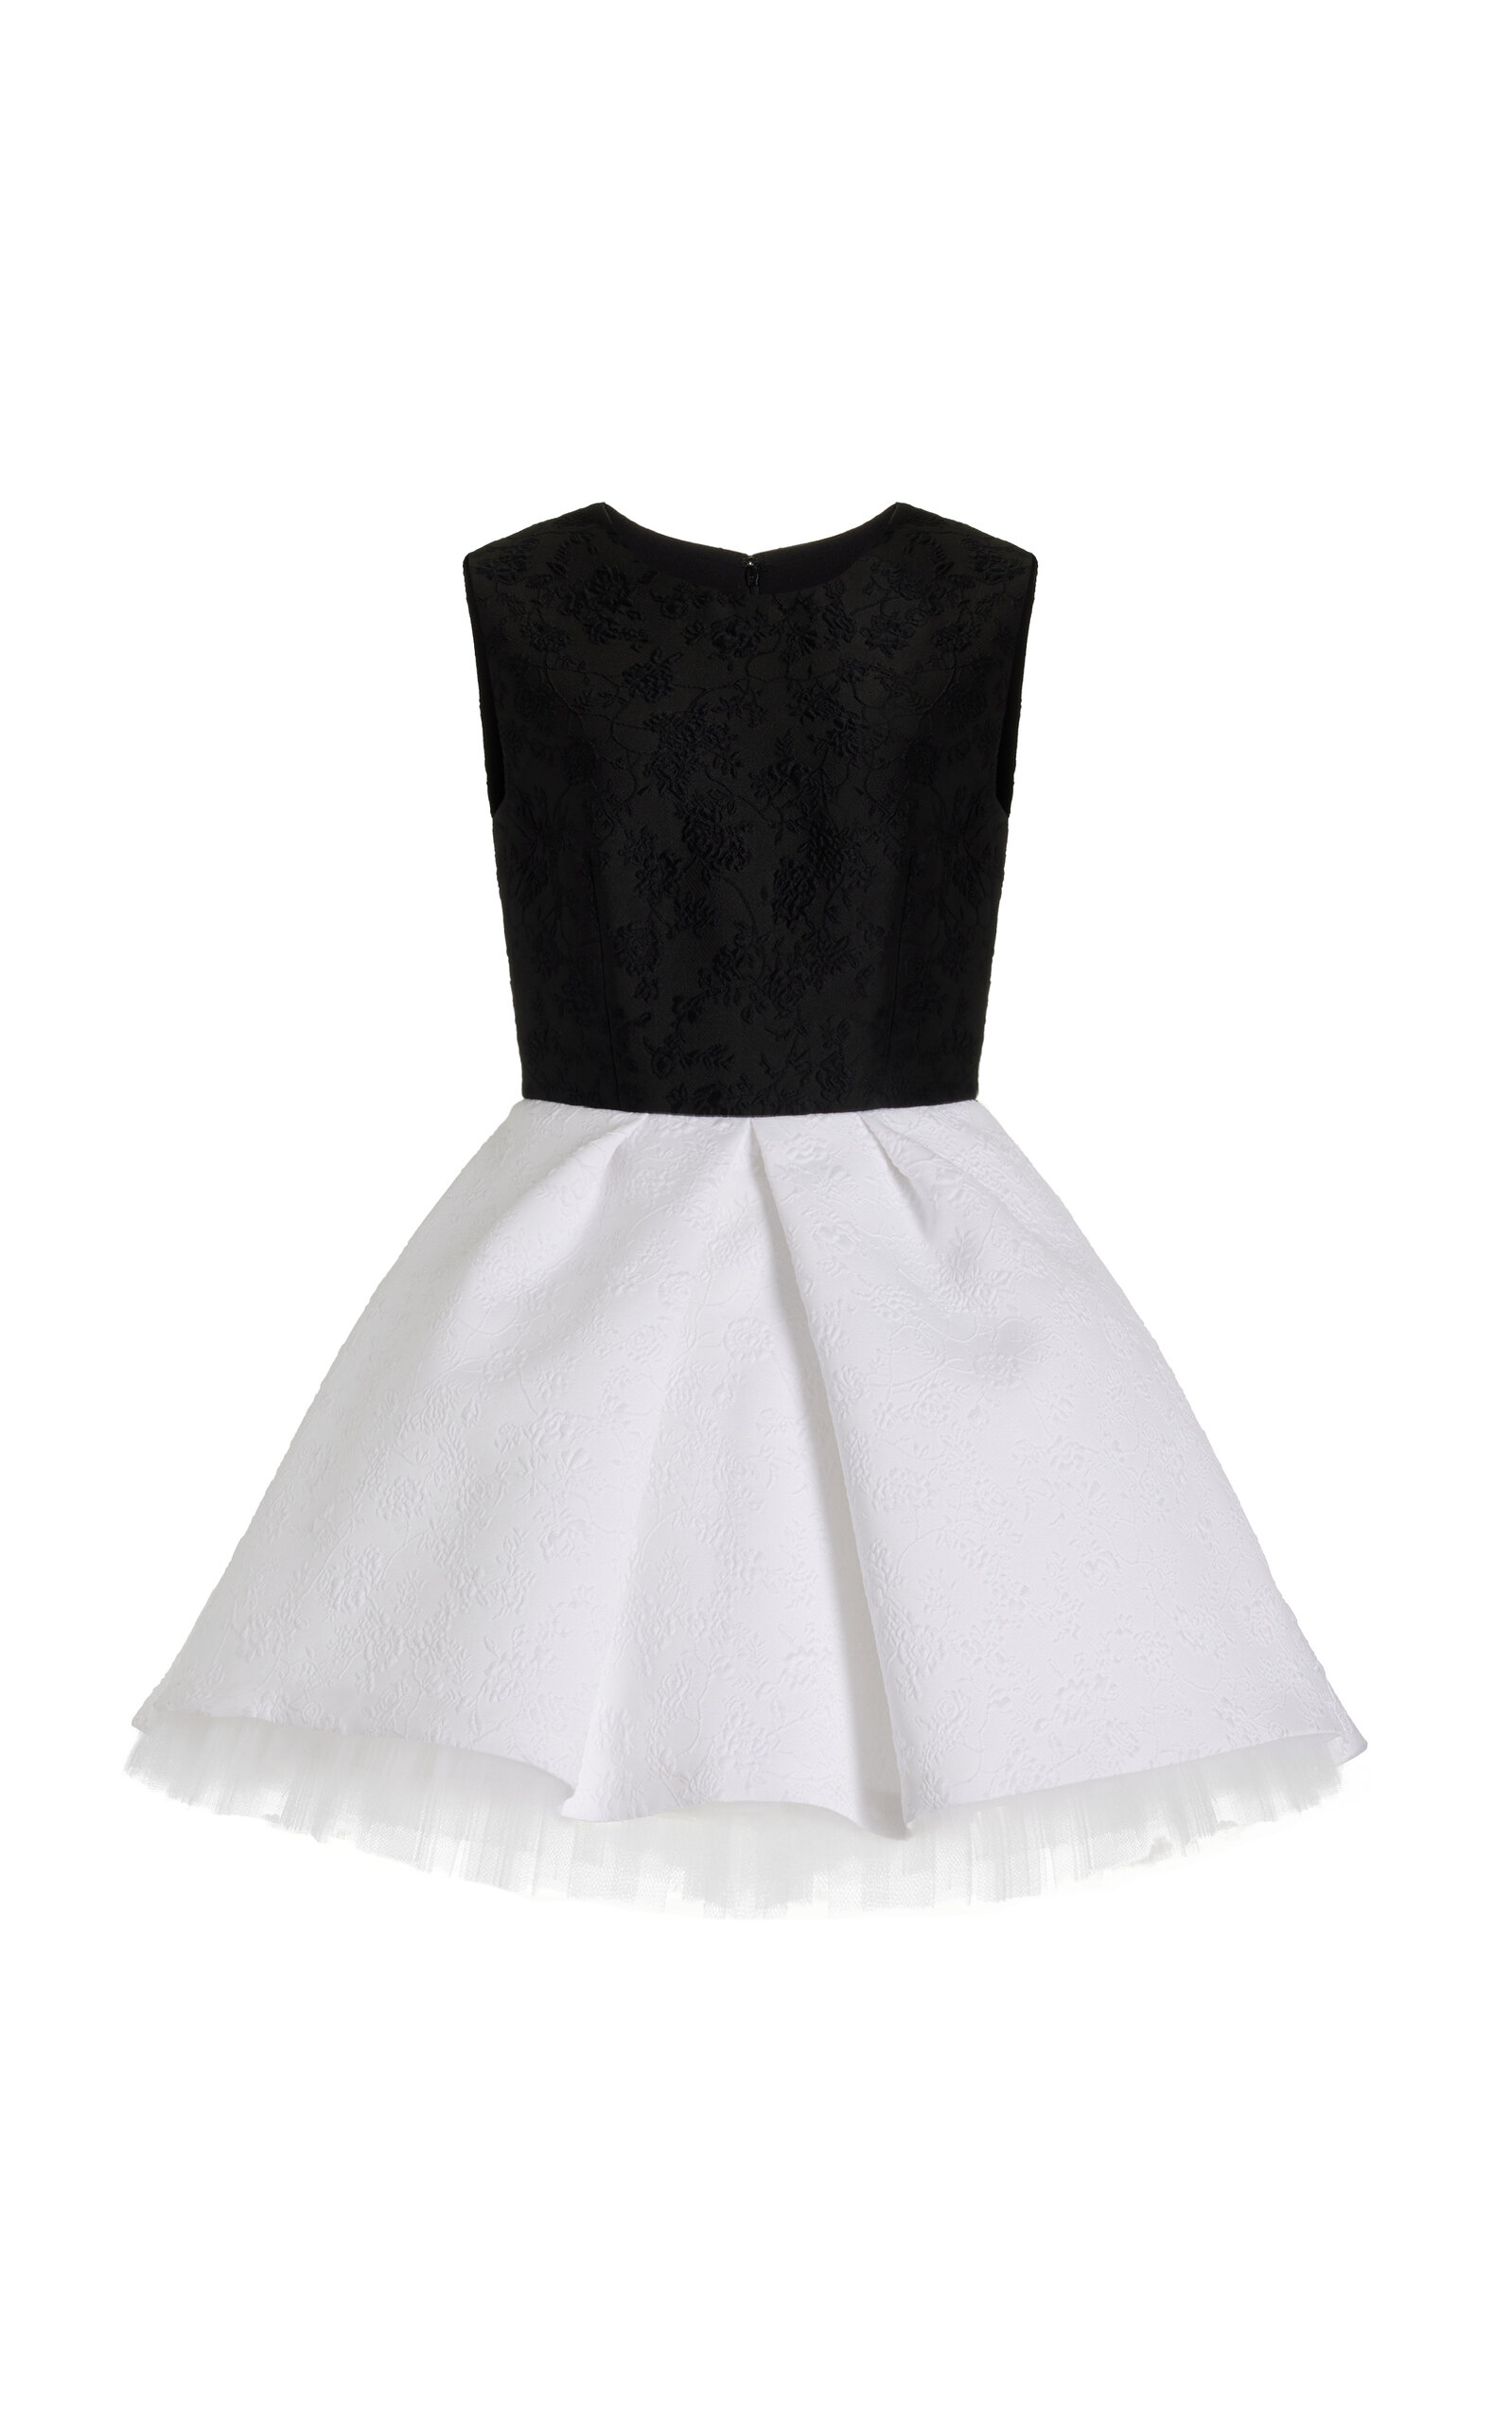 Carolina Herrera - Women's Pleated Mini Dress - Black/white - US 0 - Only At Moda Operandi